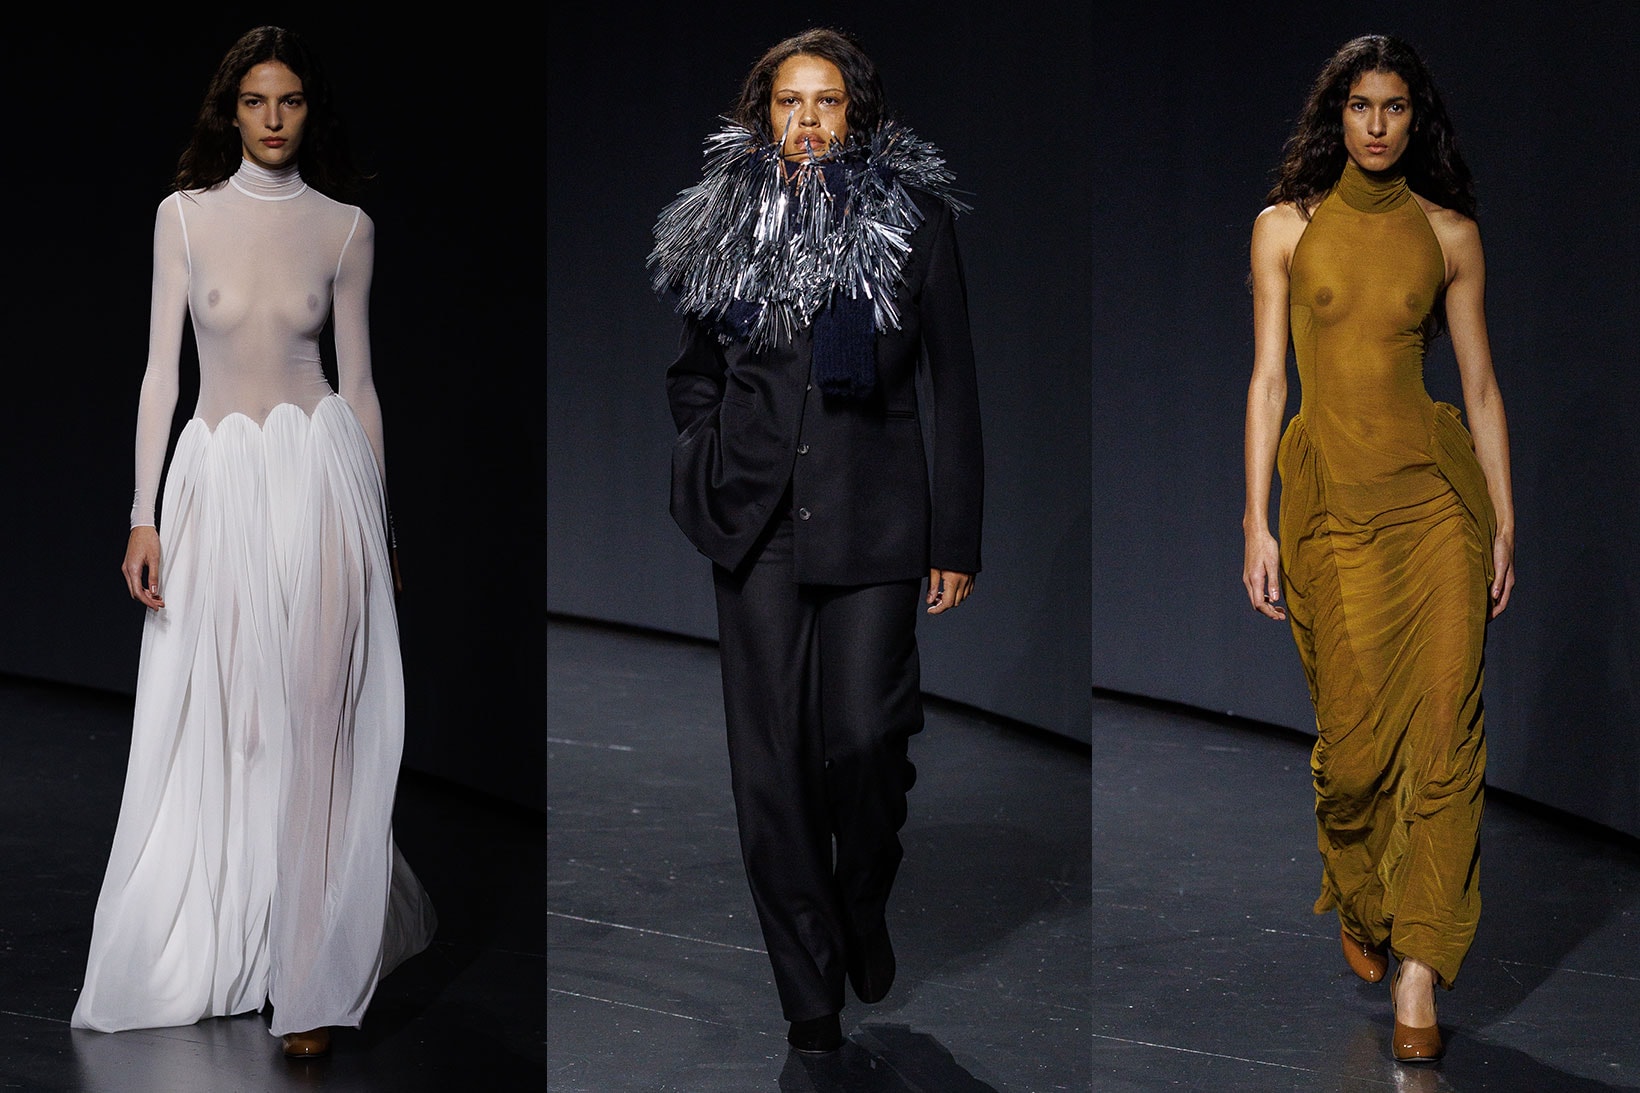 16arlington runway london fashion show sheer net mesh fur silver tinsel